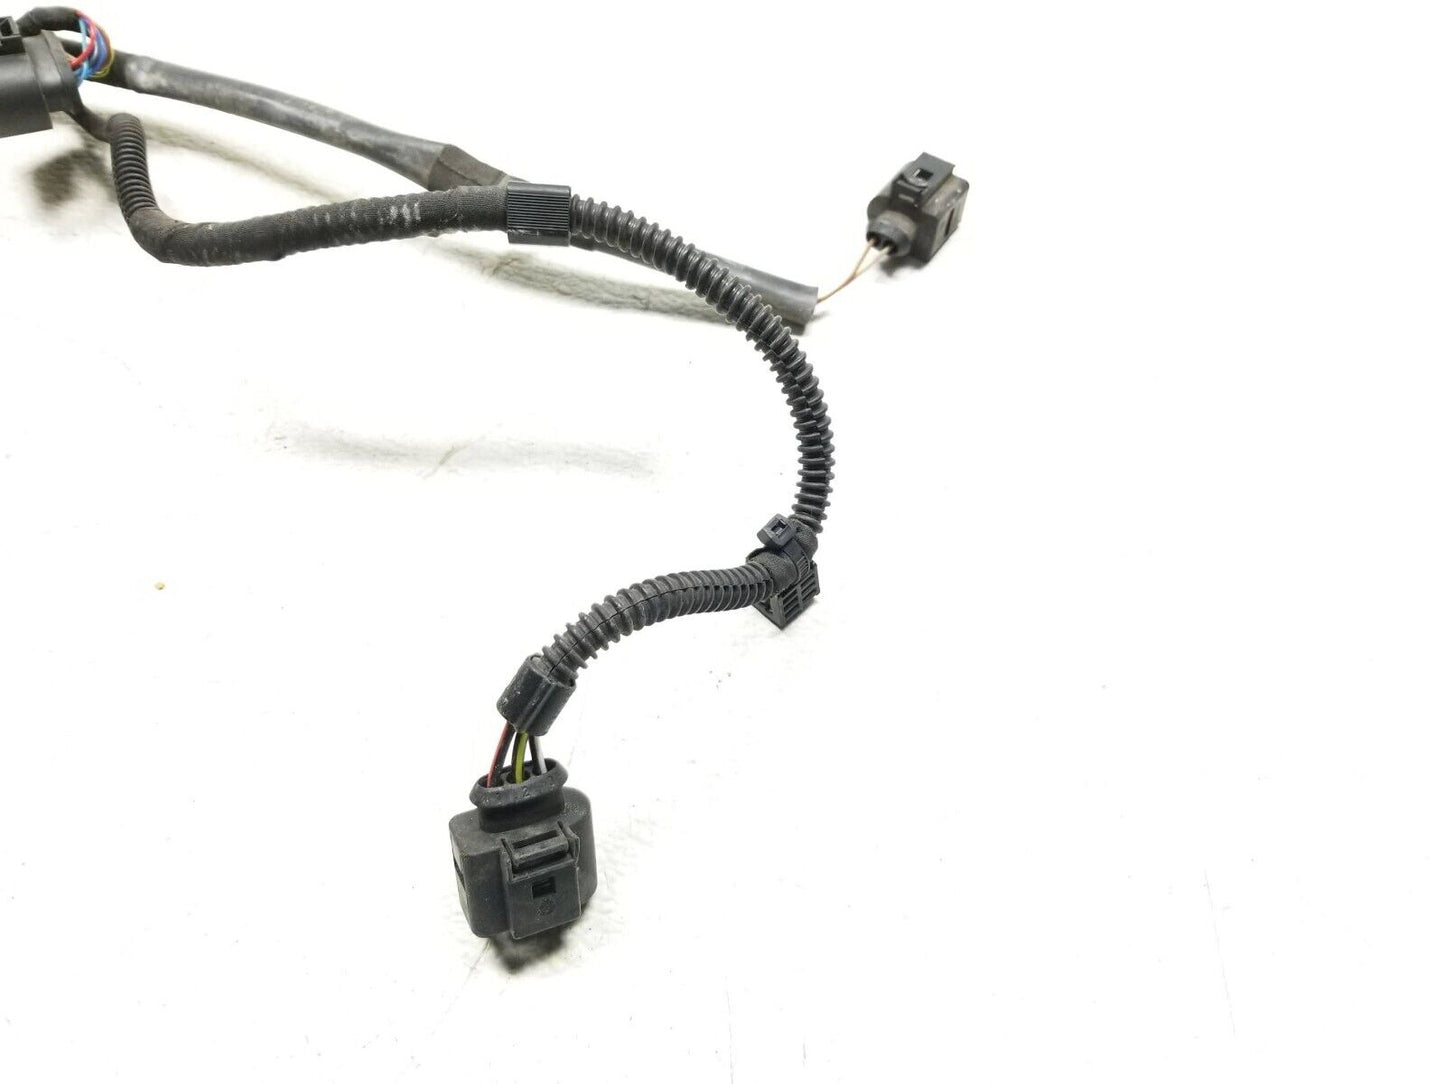 2011 - 2014 Porsche Cayenne 3.6l Transmission Wire Wiring Harness 7p0971771a OEM